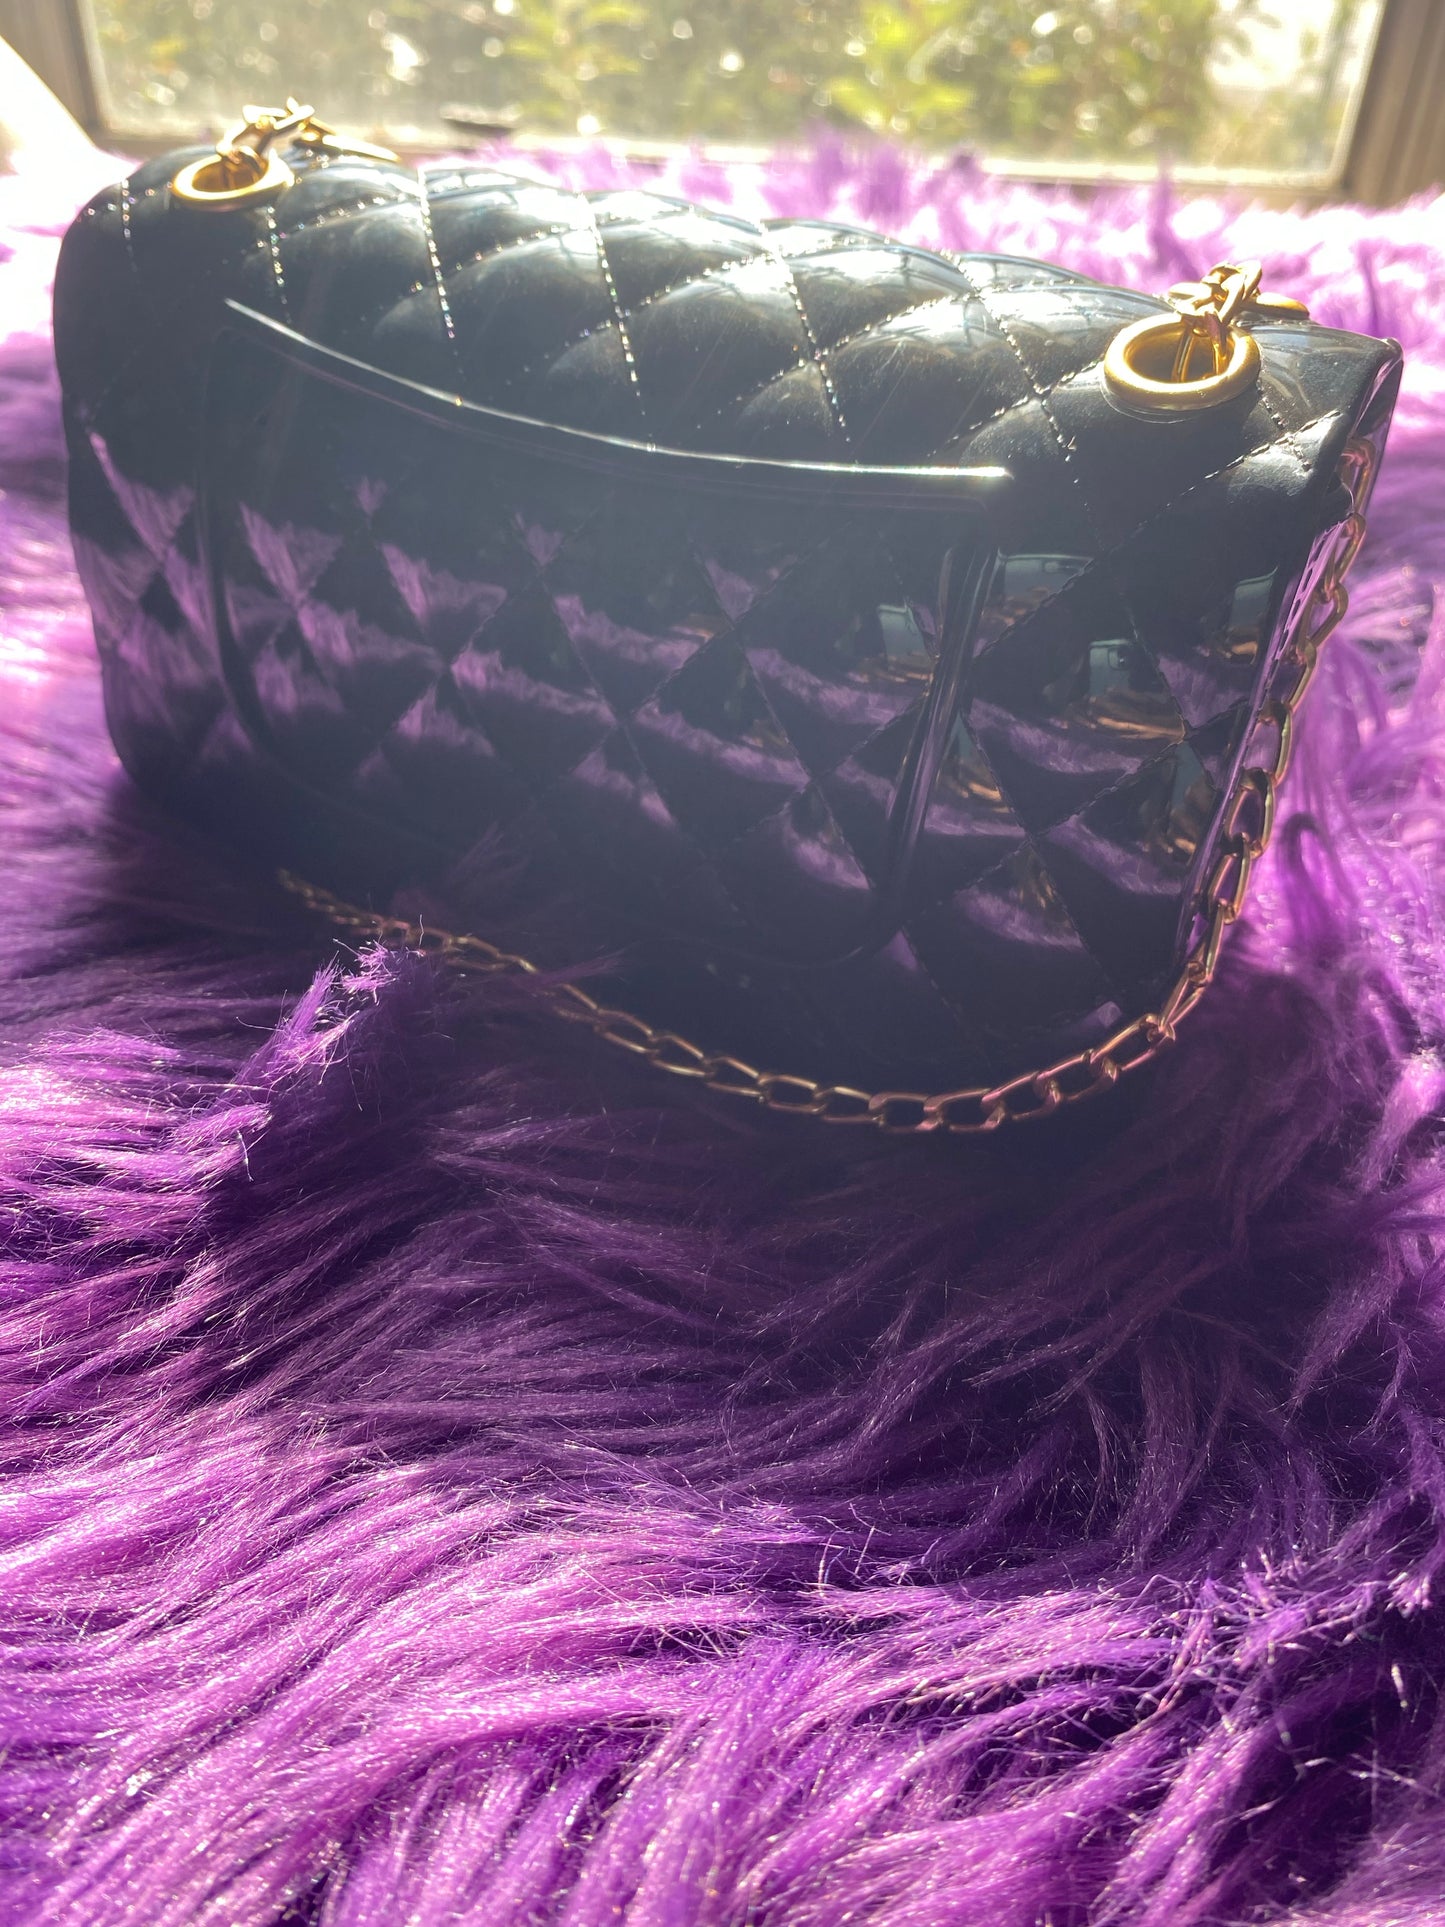 “Clutched Up” Handbag